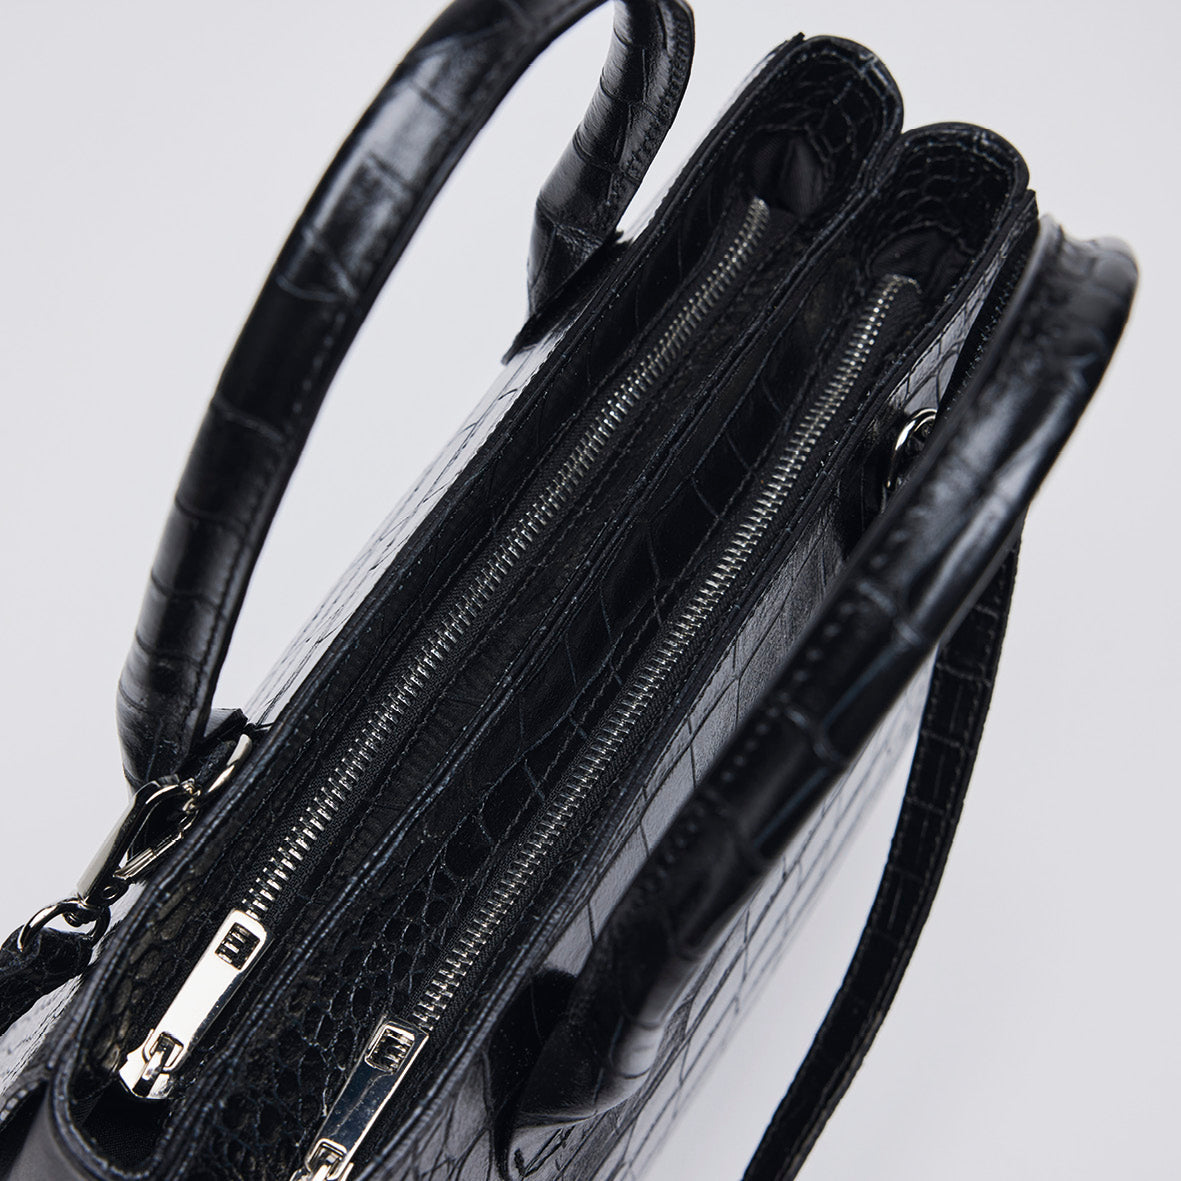 Croco leather handbag - Montaigne